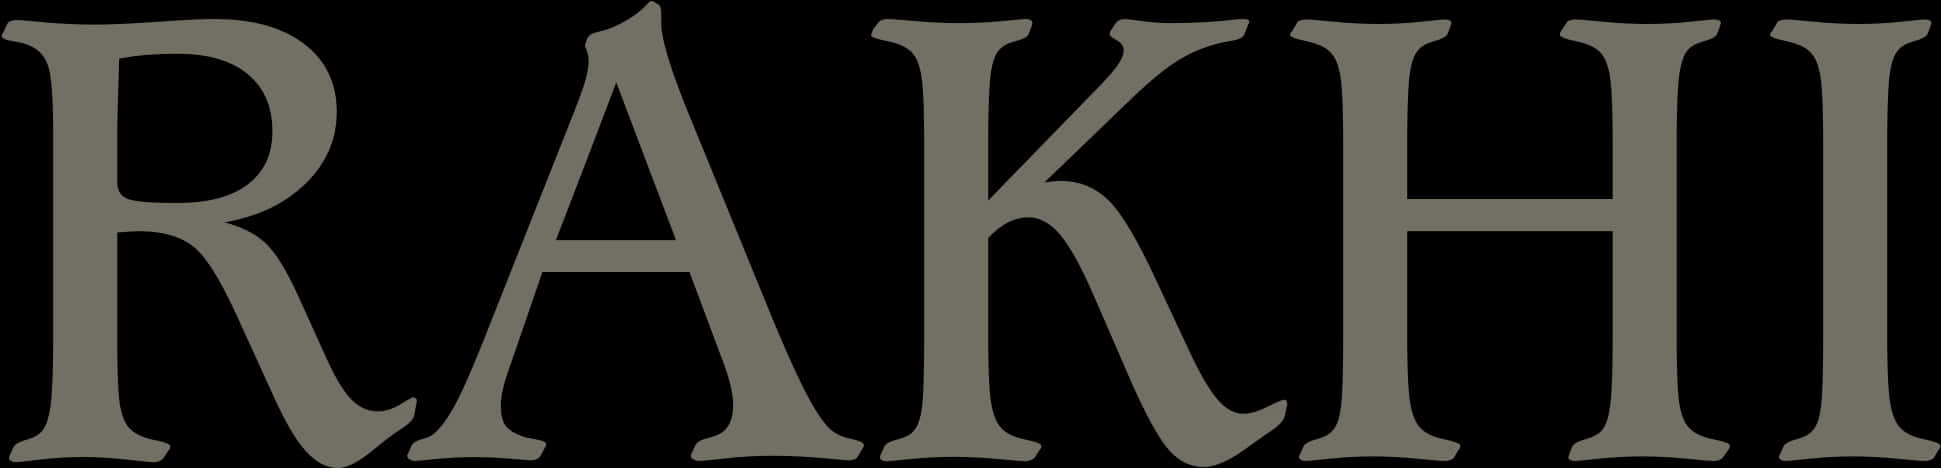 Rakhi Text Logo Black Background PNG image